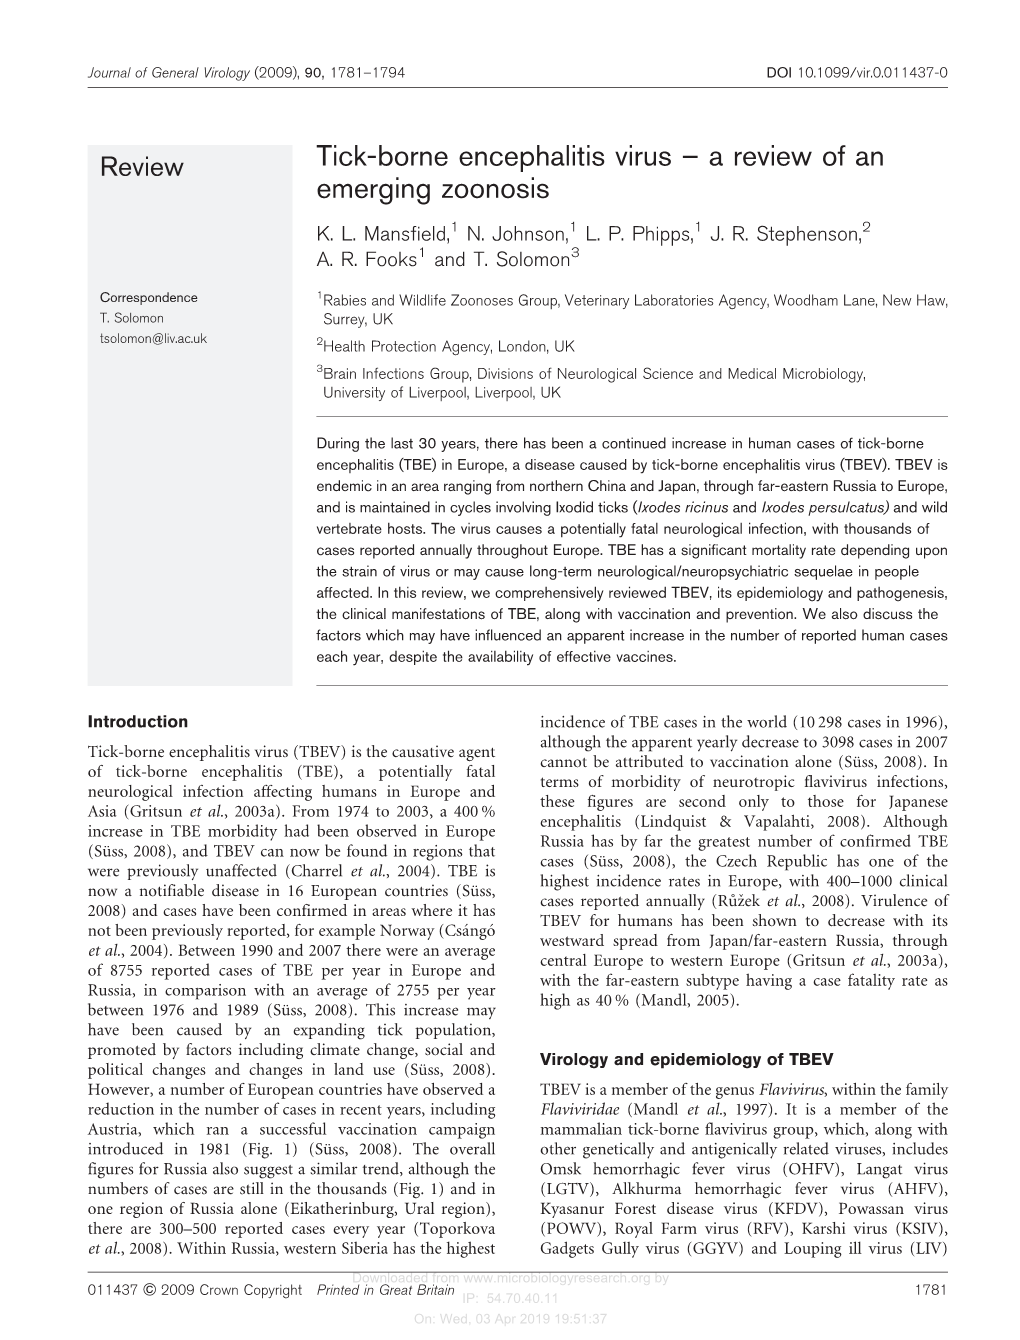 Tick-Borne Encephalitis Virus – a Review of an Emerging Zoonosis